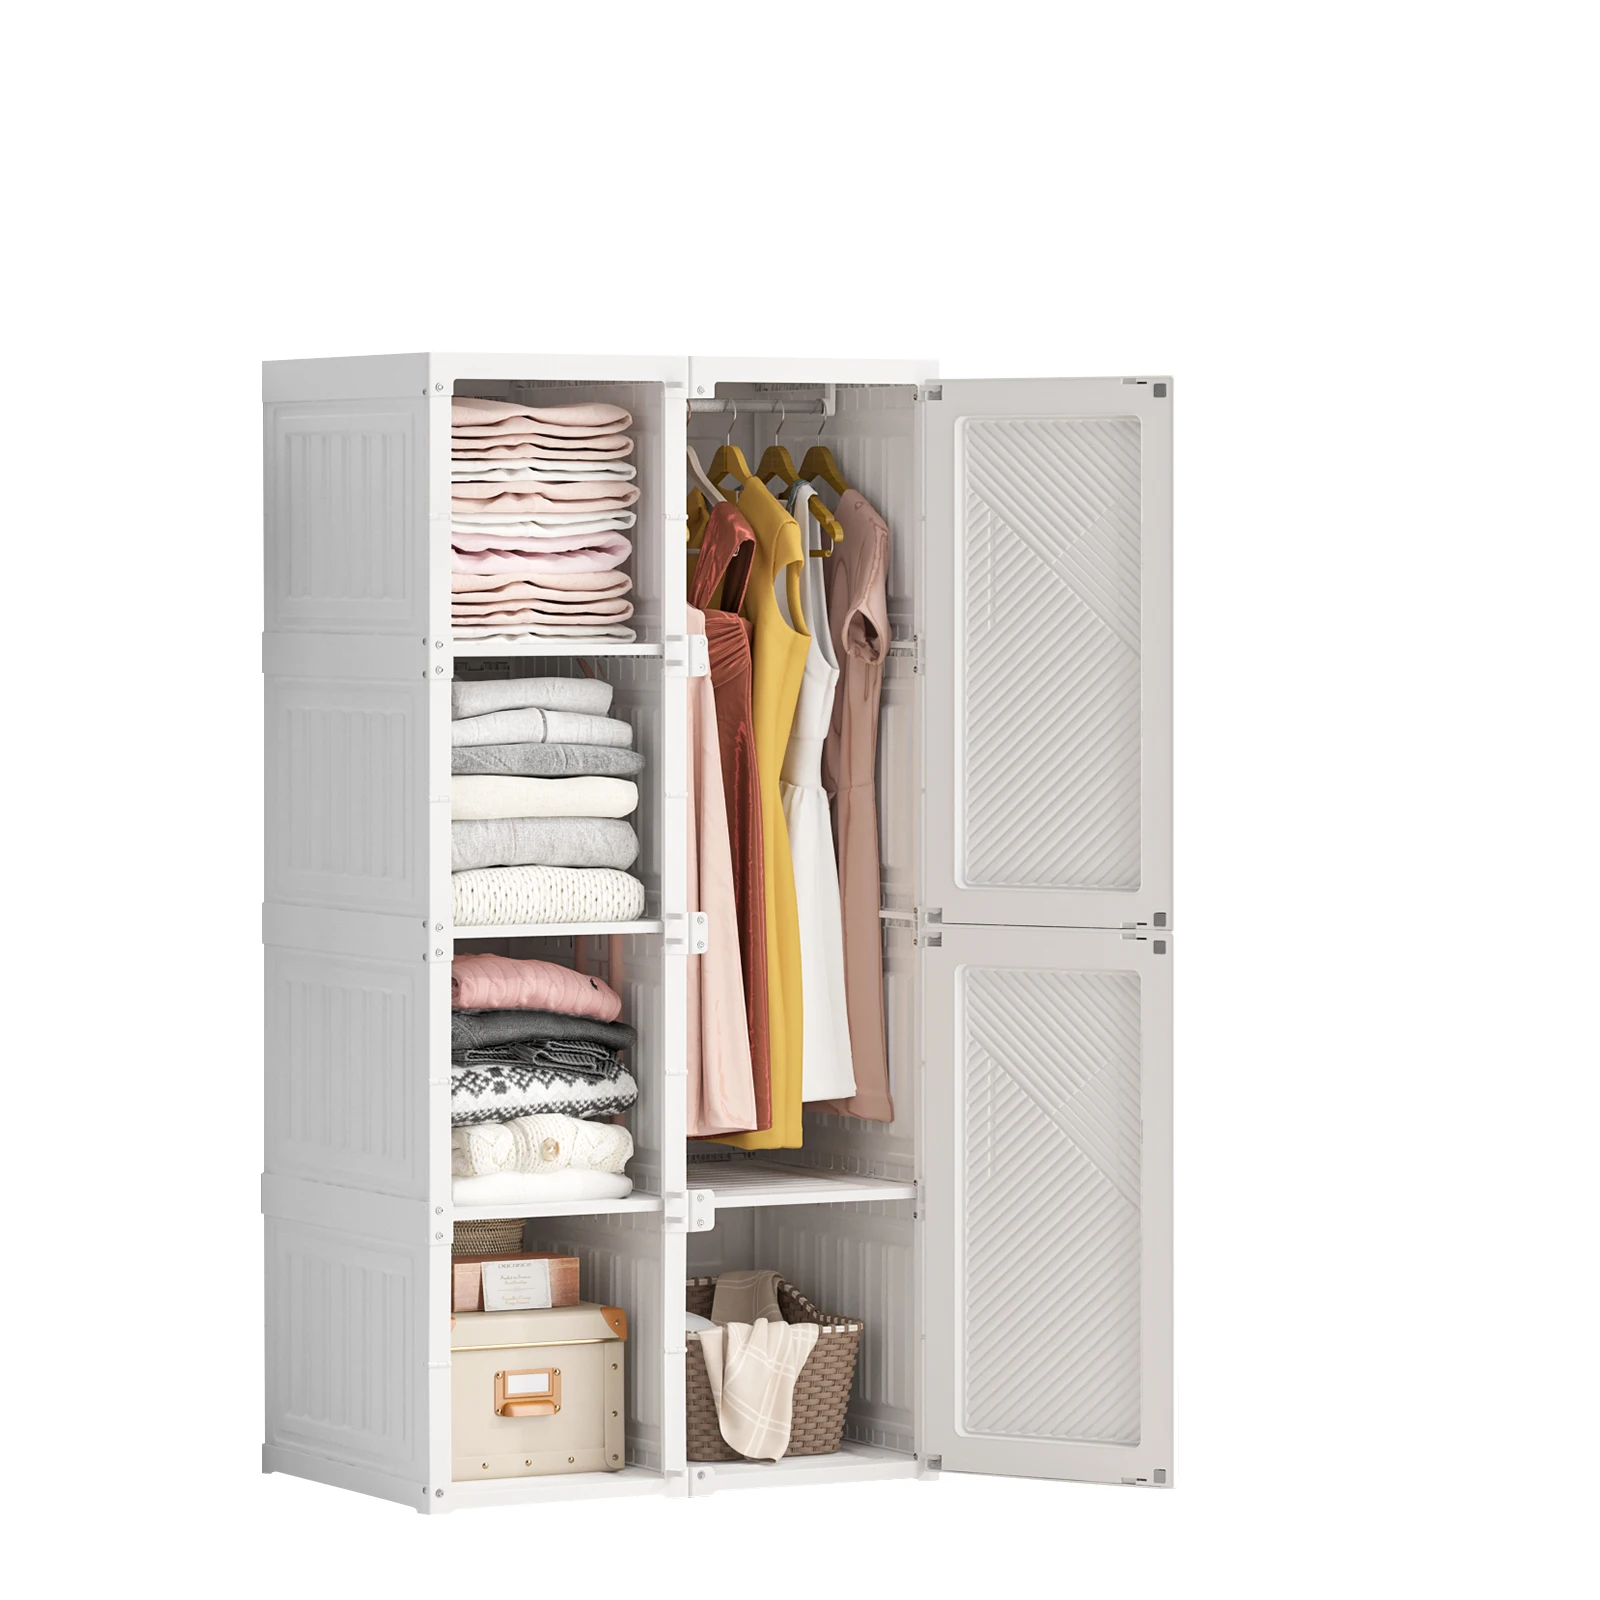 

2021 Amazon hot selling modern wardrobe wardrobe organizer Colorless odorless dirt-resistant and detachable wardrobe, White